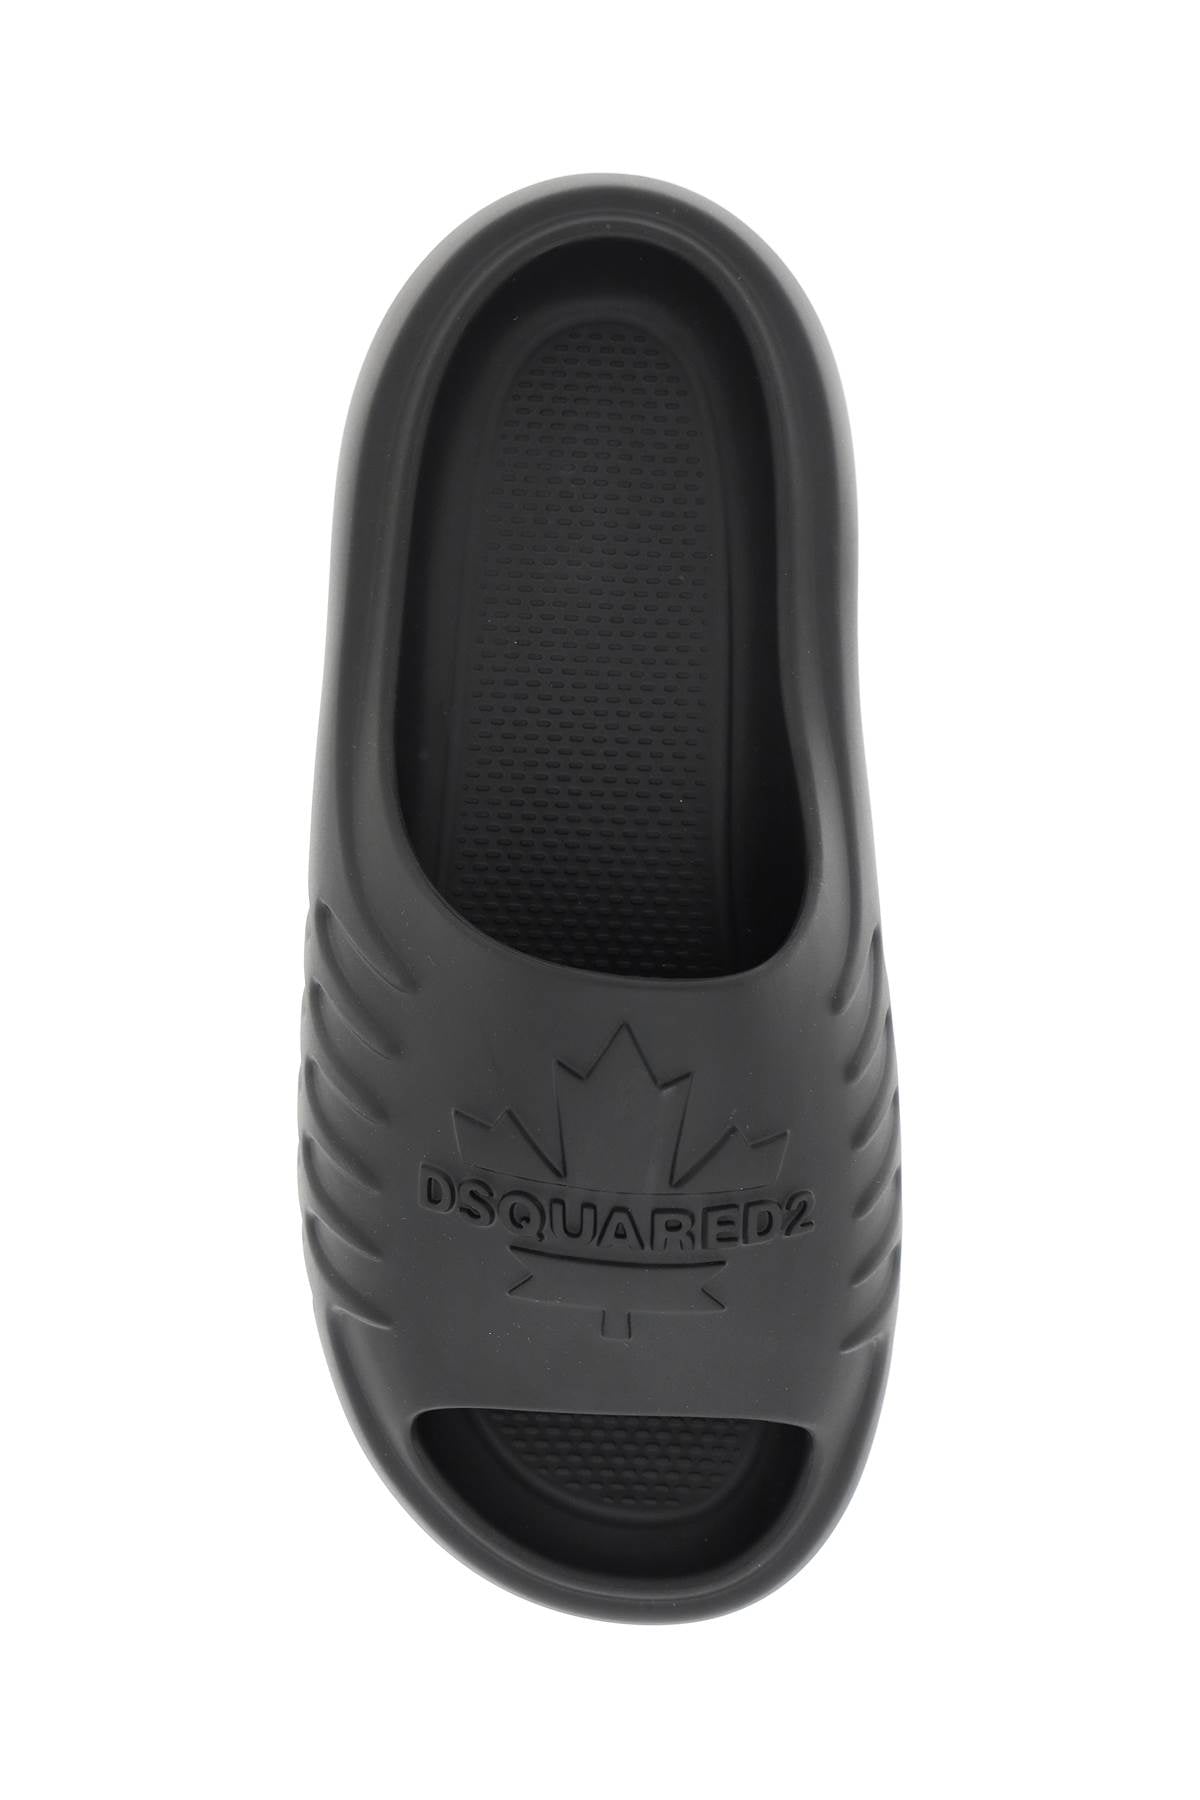 DSQUARED2 Oversized Rubber Slide Sandals with Canadian Maple Leaf Print for Men